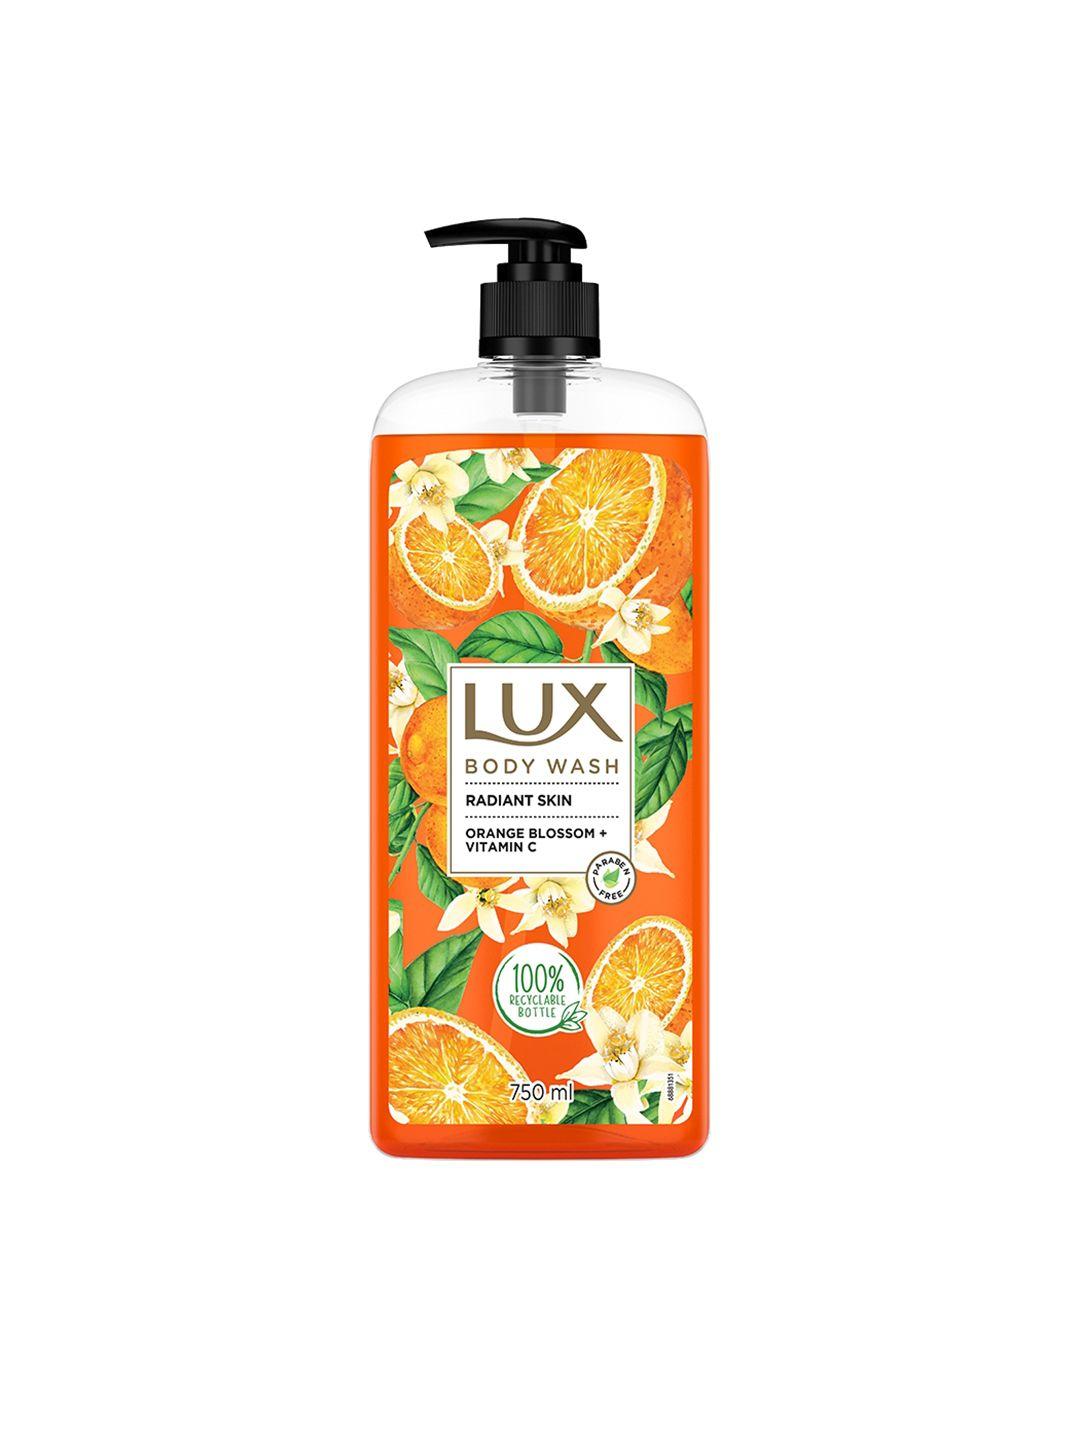 lux radiant skin body wash with orange blossom & vitamin c - 750 ml